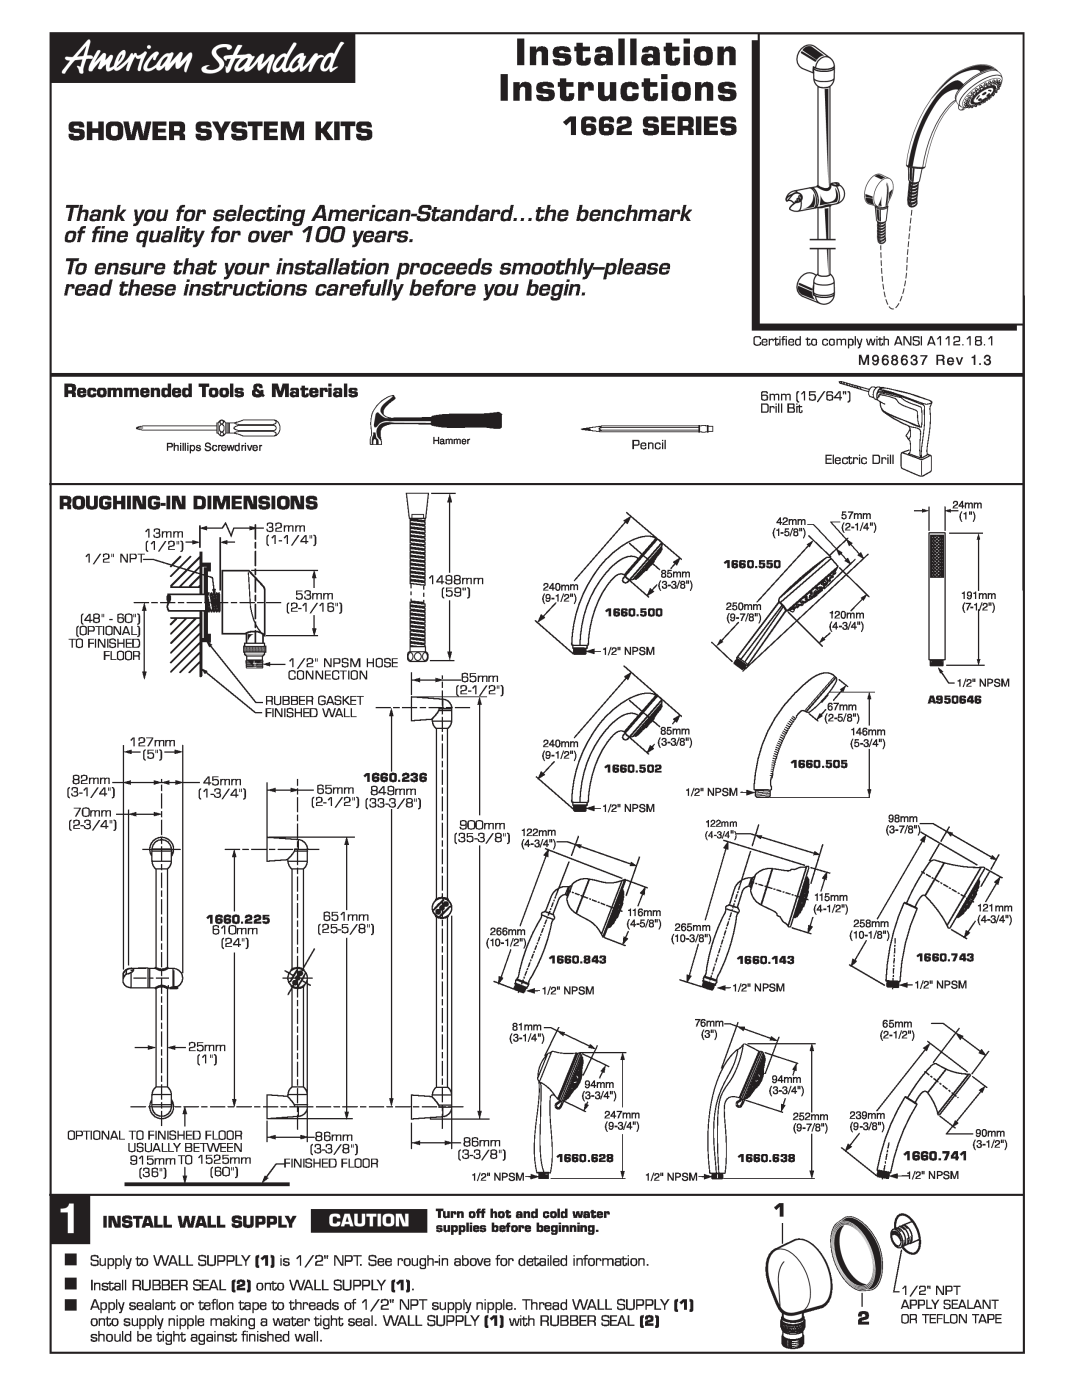 American Standard 1662 installation instructions Installation, Instructions, Shower System Kits, Series 